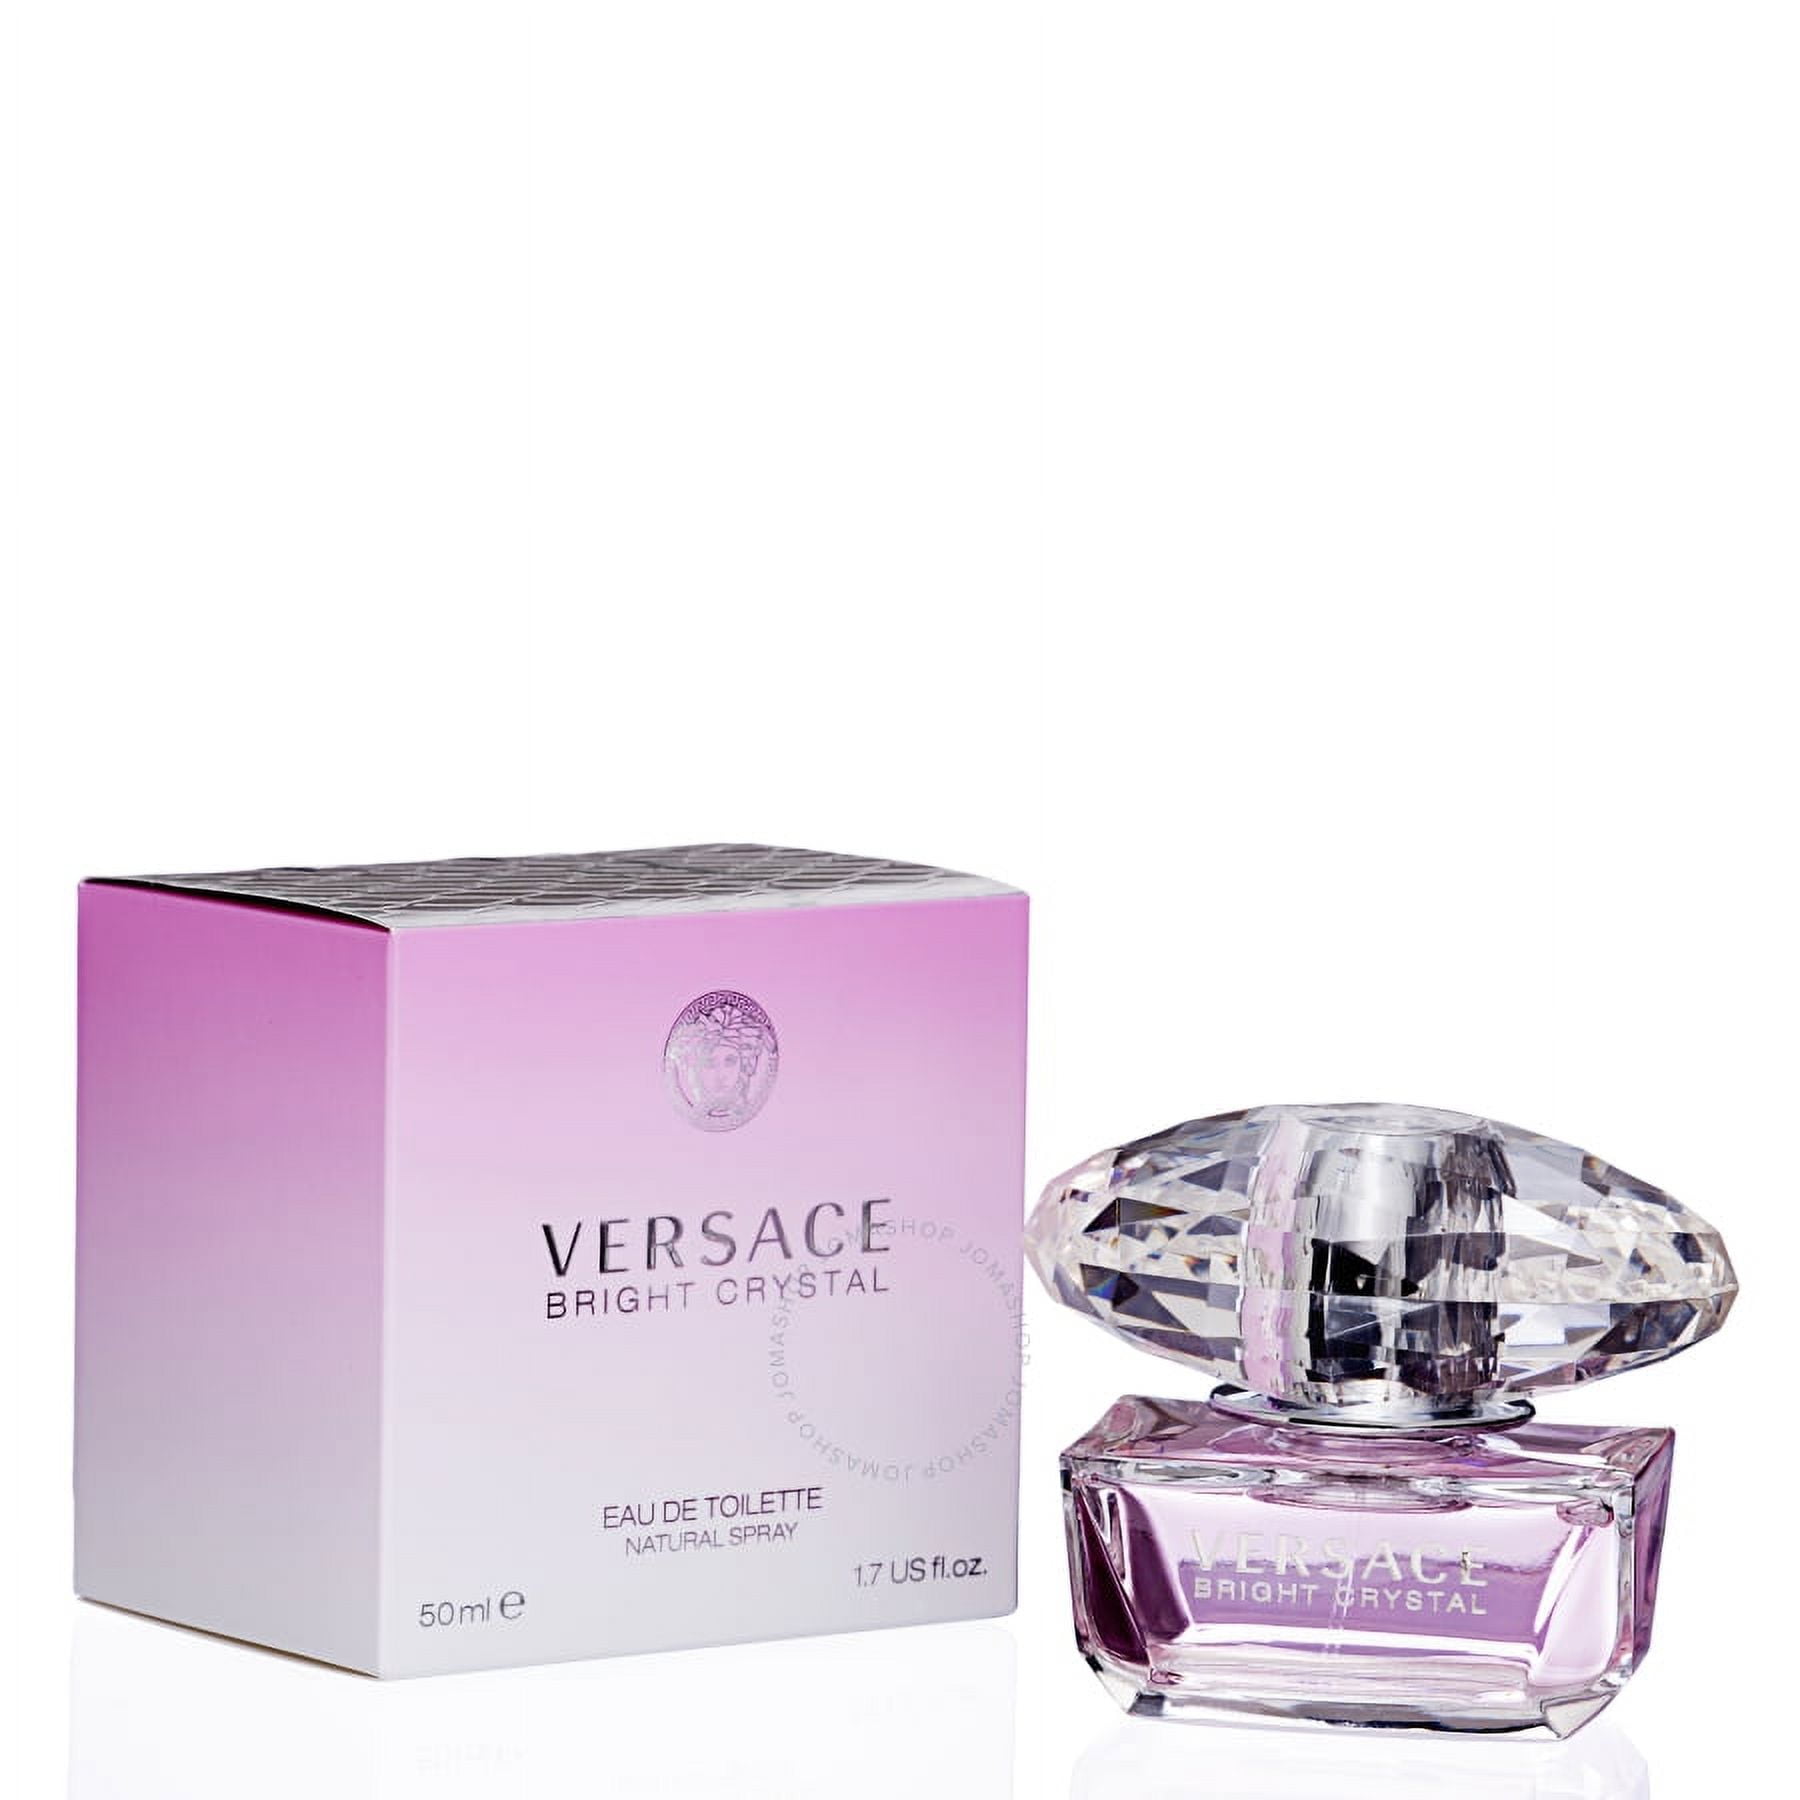 1.7-Oz Versace Bright Crystal Eau de Toilette Perfume for Women $37.35 + Free Shipping